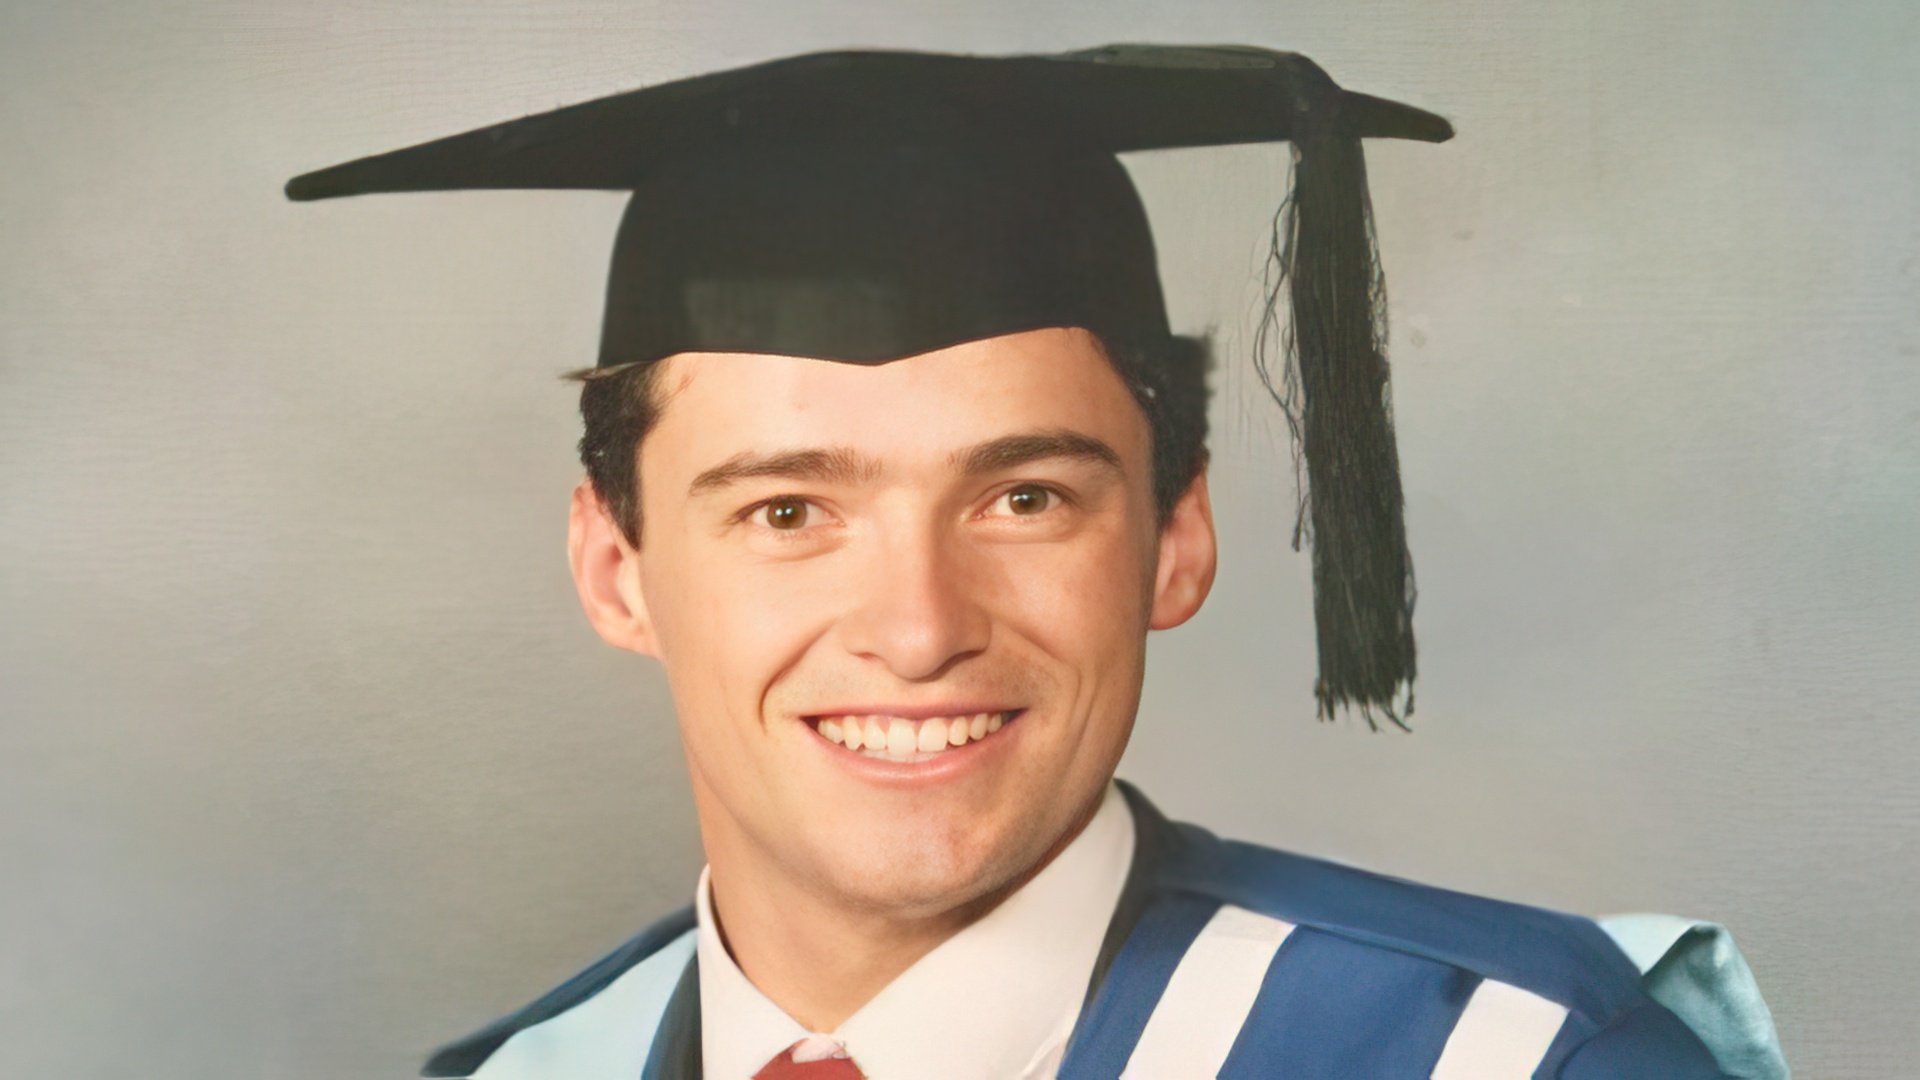 1991: University of Technology, Sydney graduation